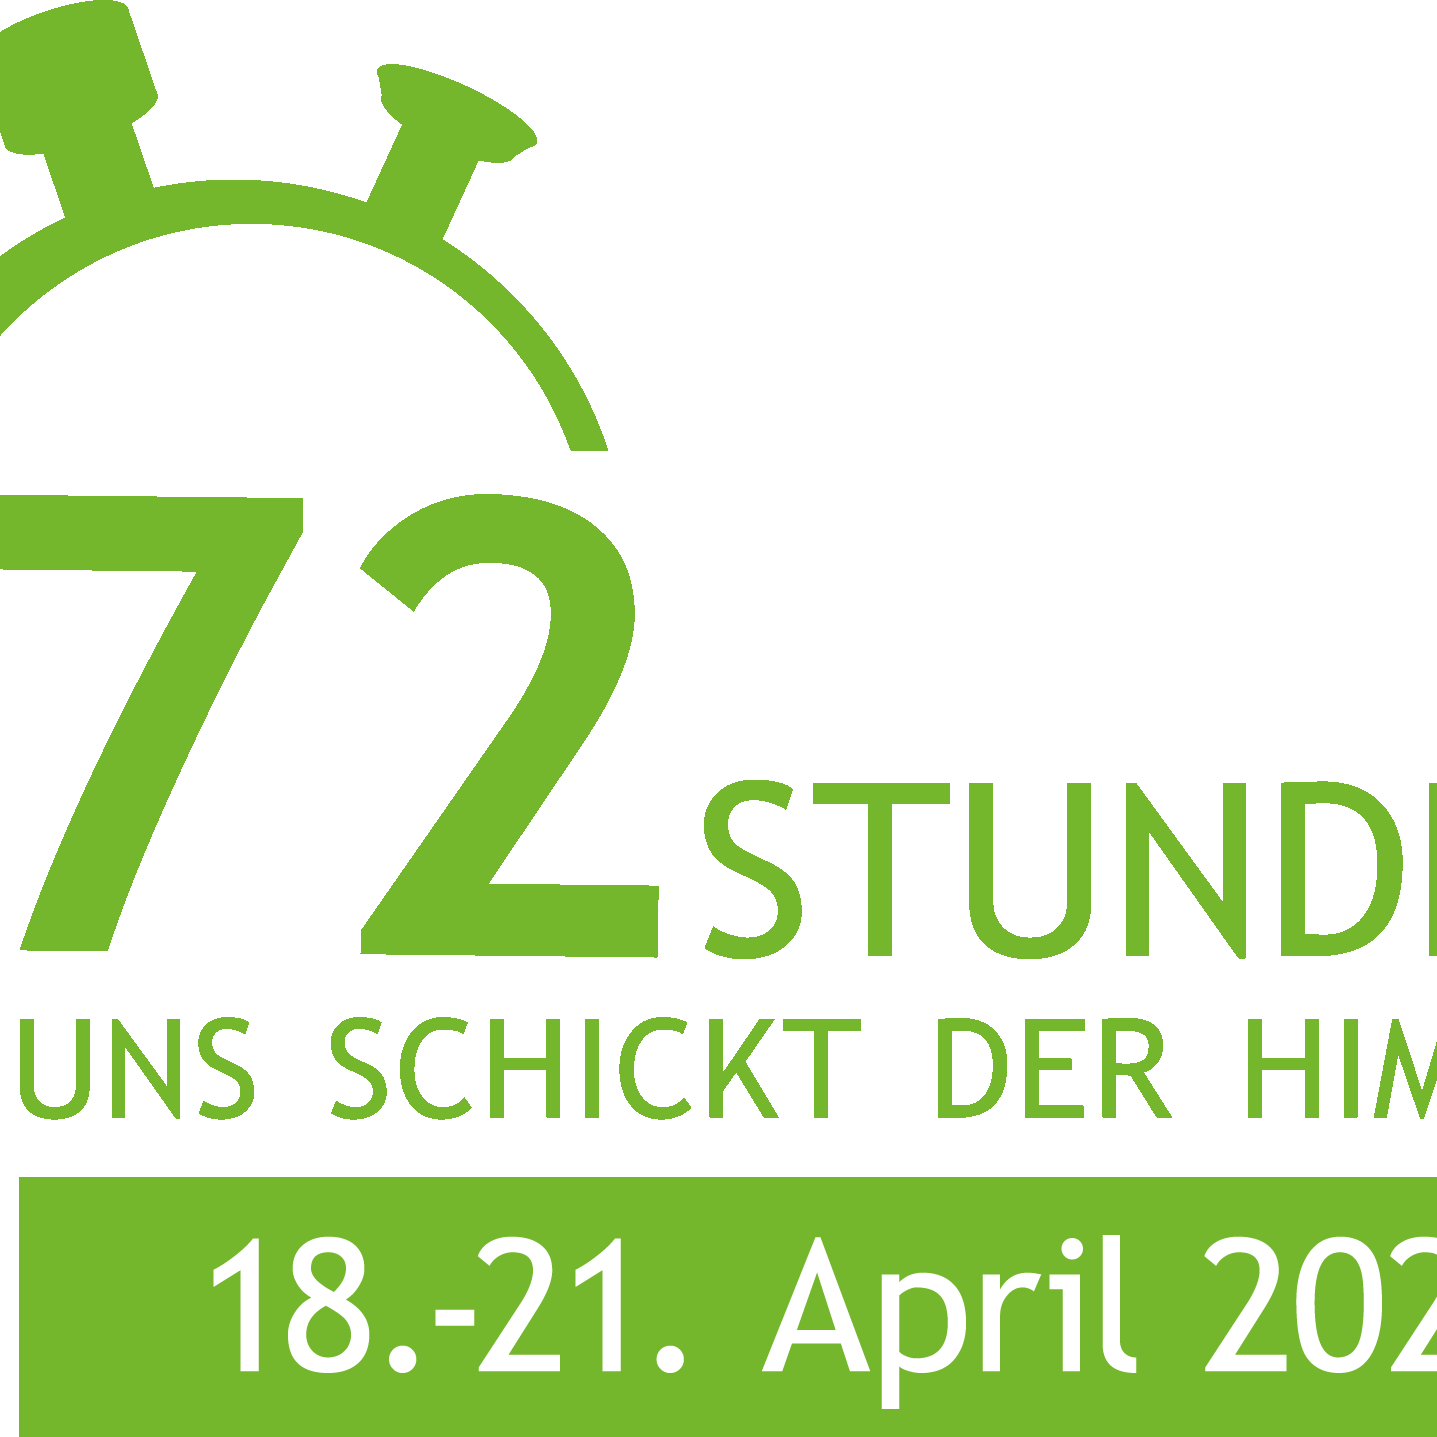 Logo 72-Stunden-Aktion